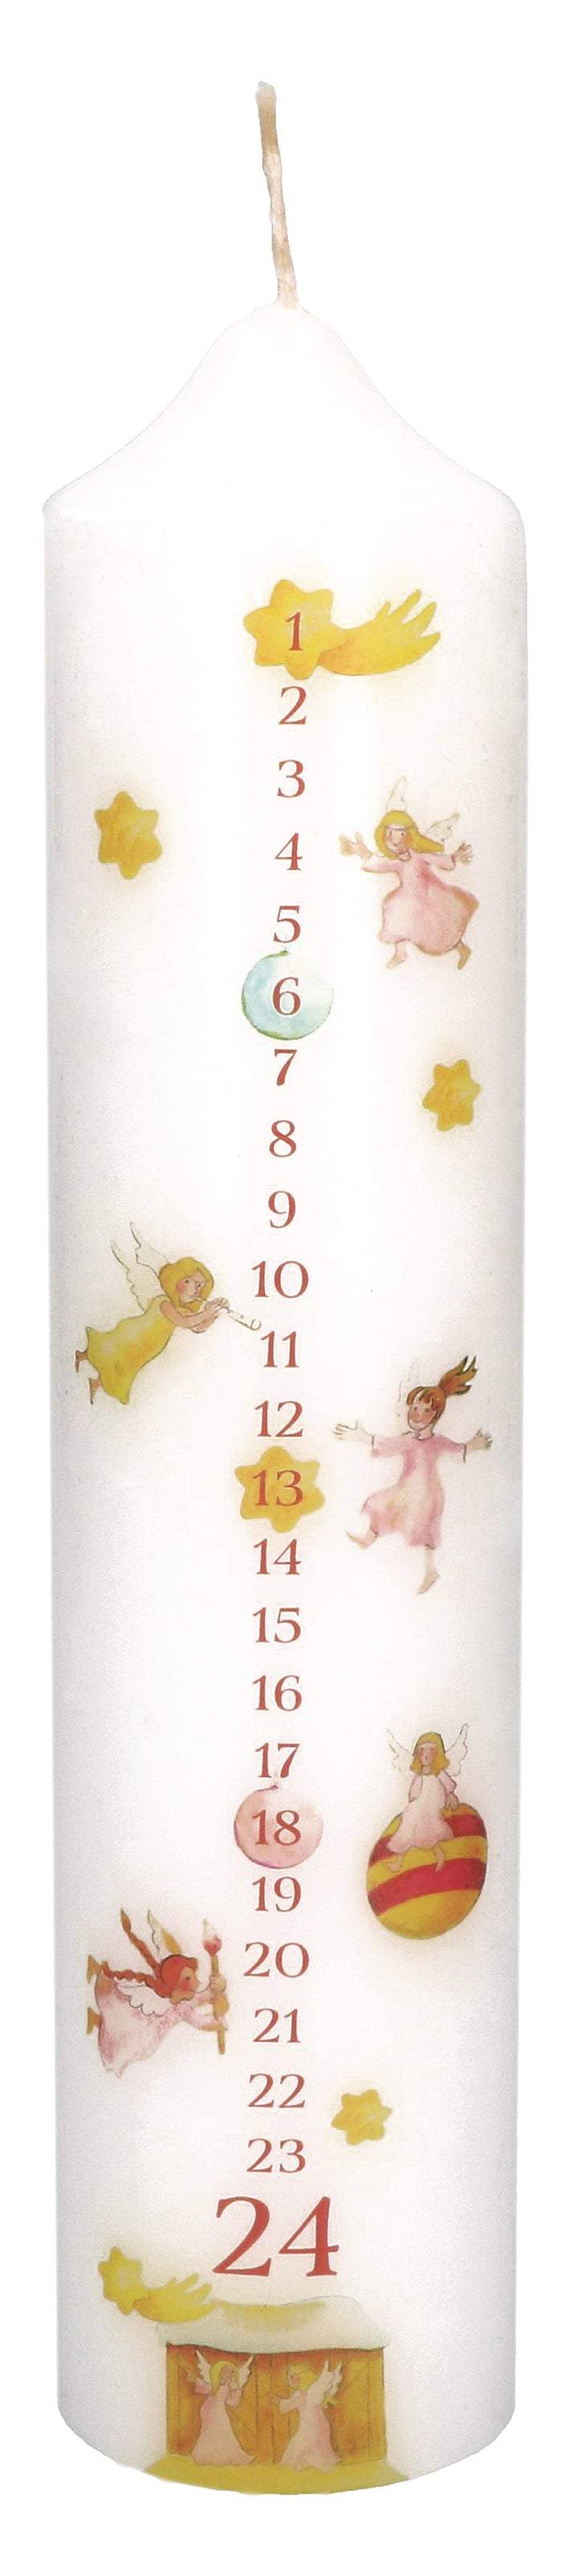 Adventskerze mit Druckmotiv 26,5 cm x 6 cm-Butzon & Bercker-Kerzen,Weihnachten